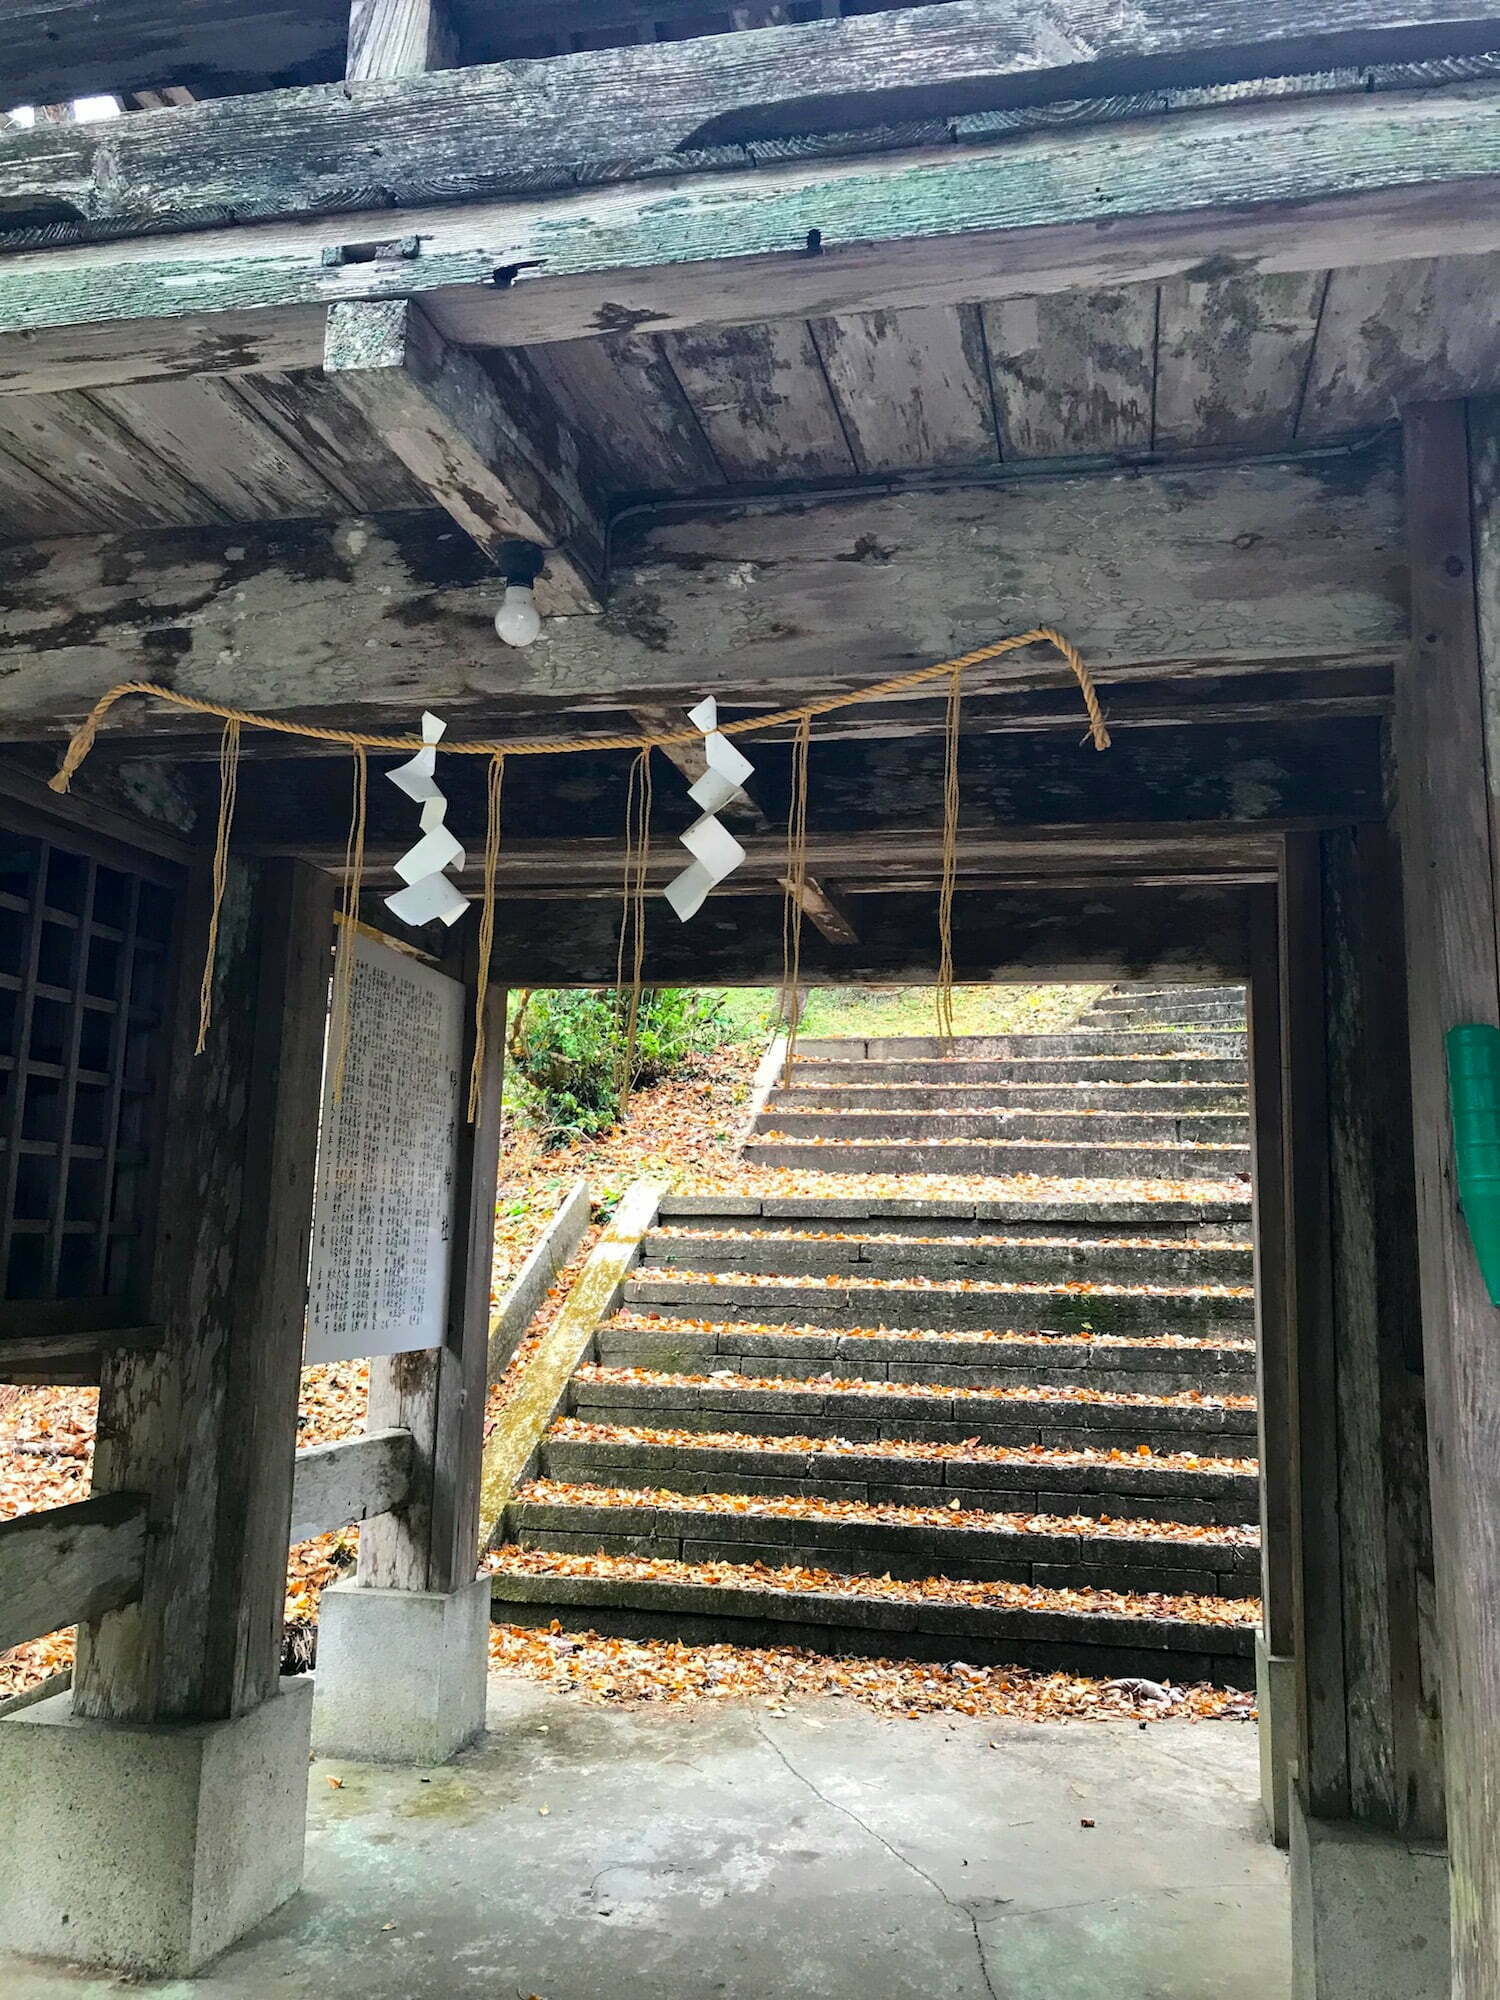 Nonami Shrine 